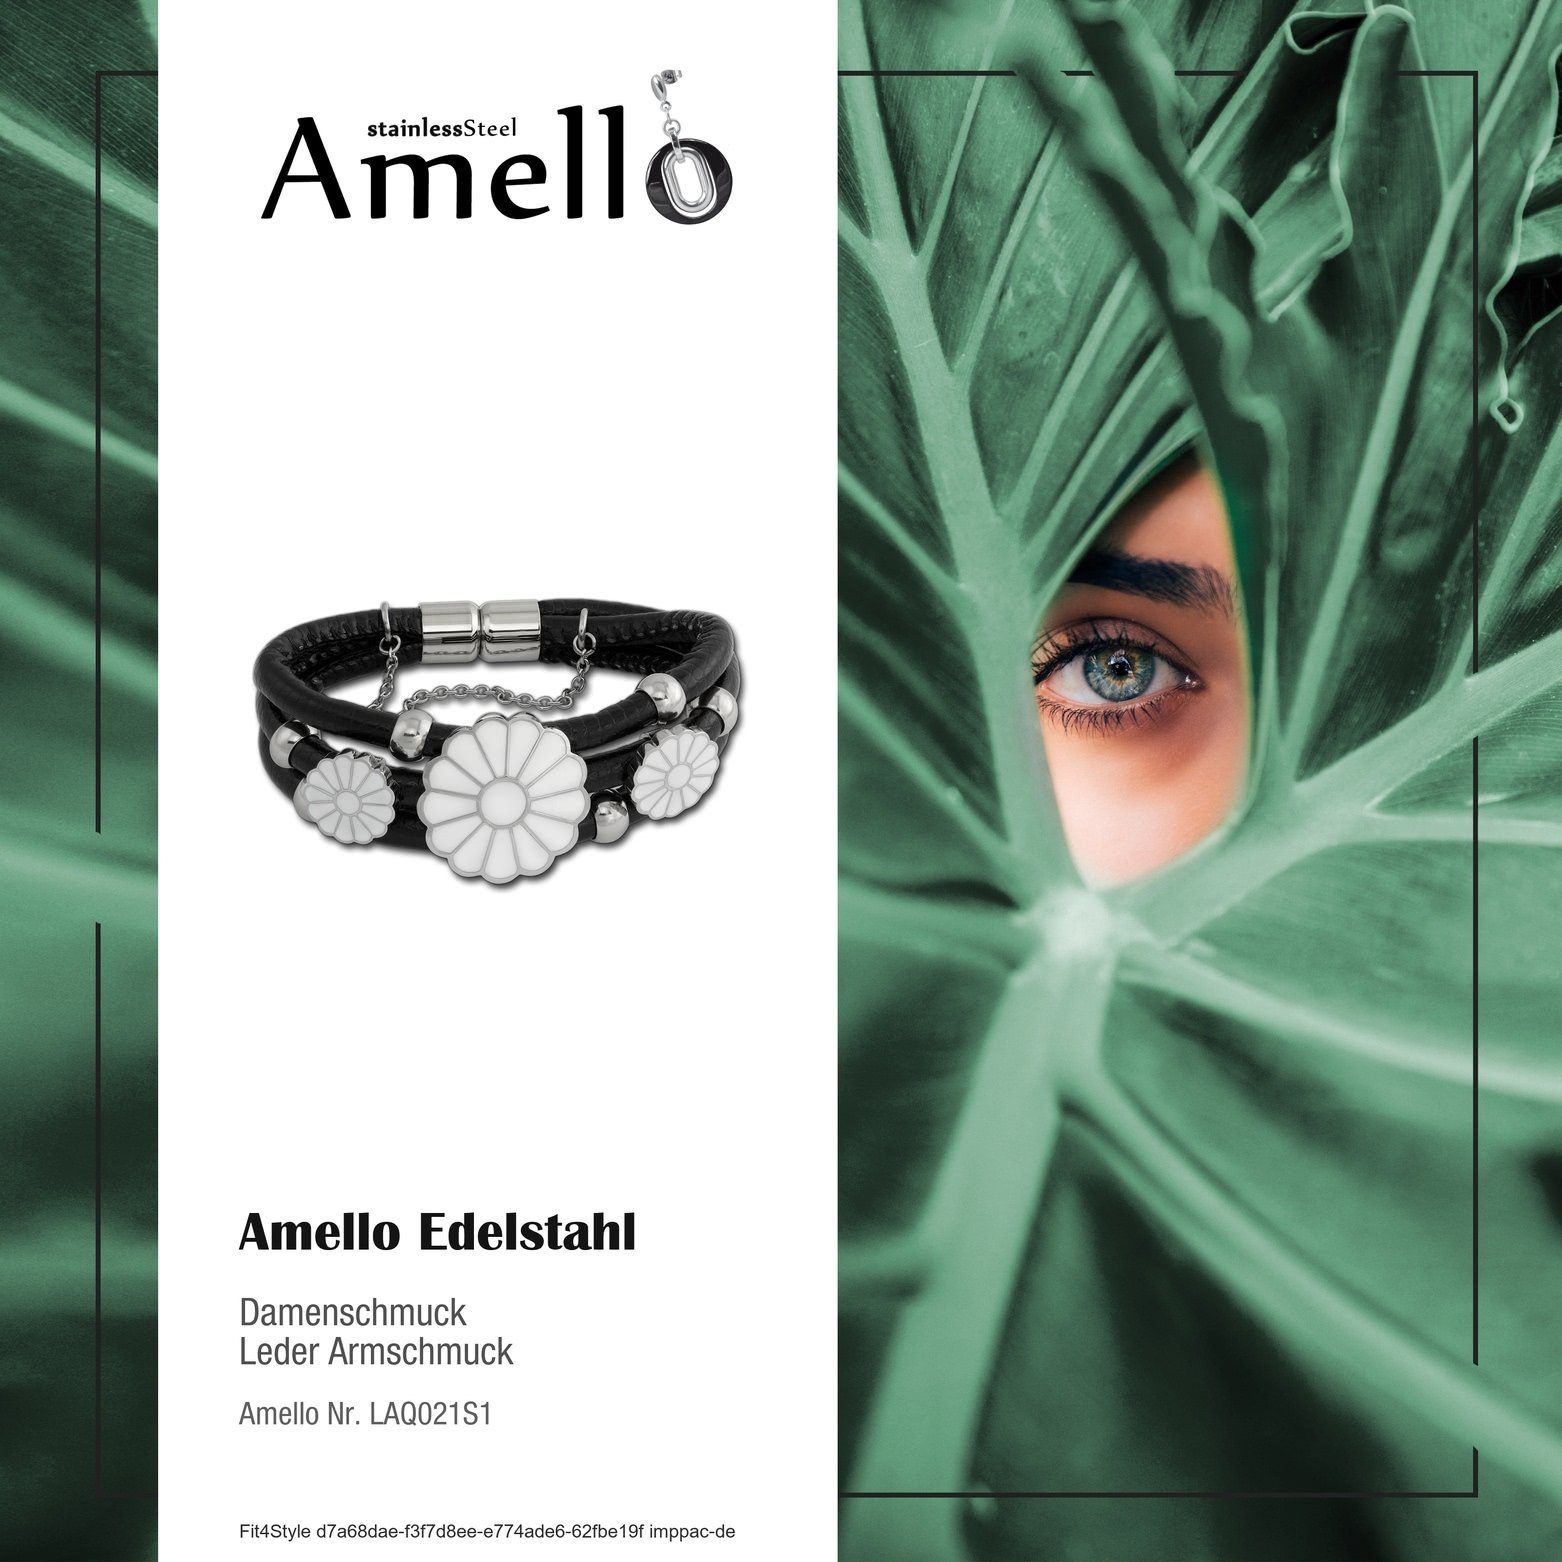 Amello Edelstahlarmband Amello Verschluss Edelstahl Damen Steel), Armband (Armband), Farbe: schwarz silber Armband (Verschluss) schwarz (Stainless